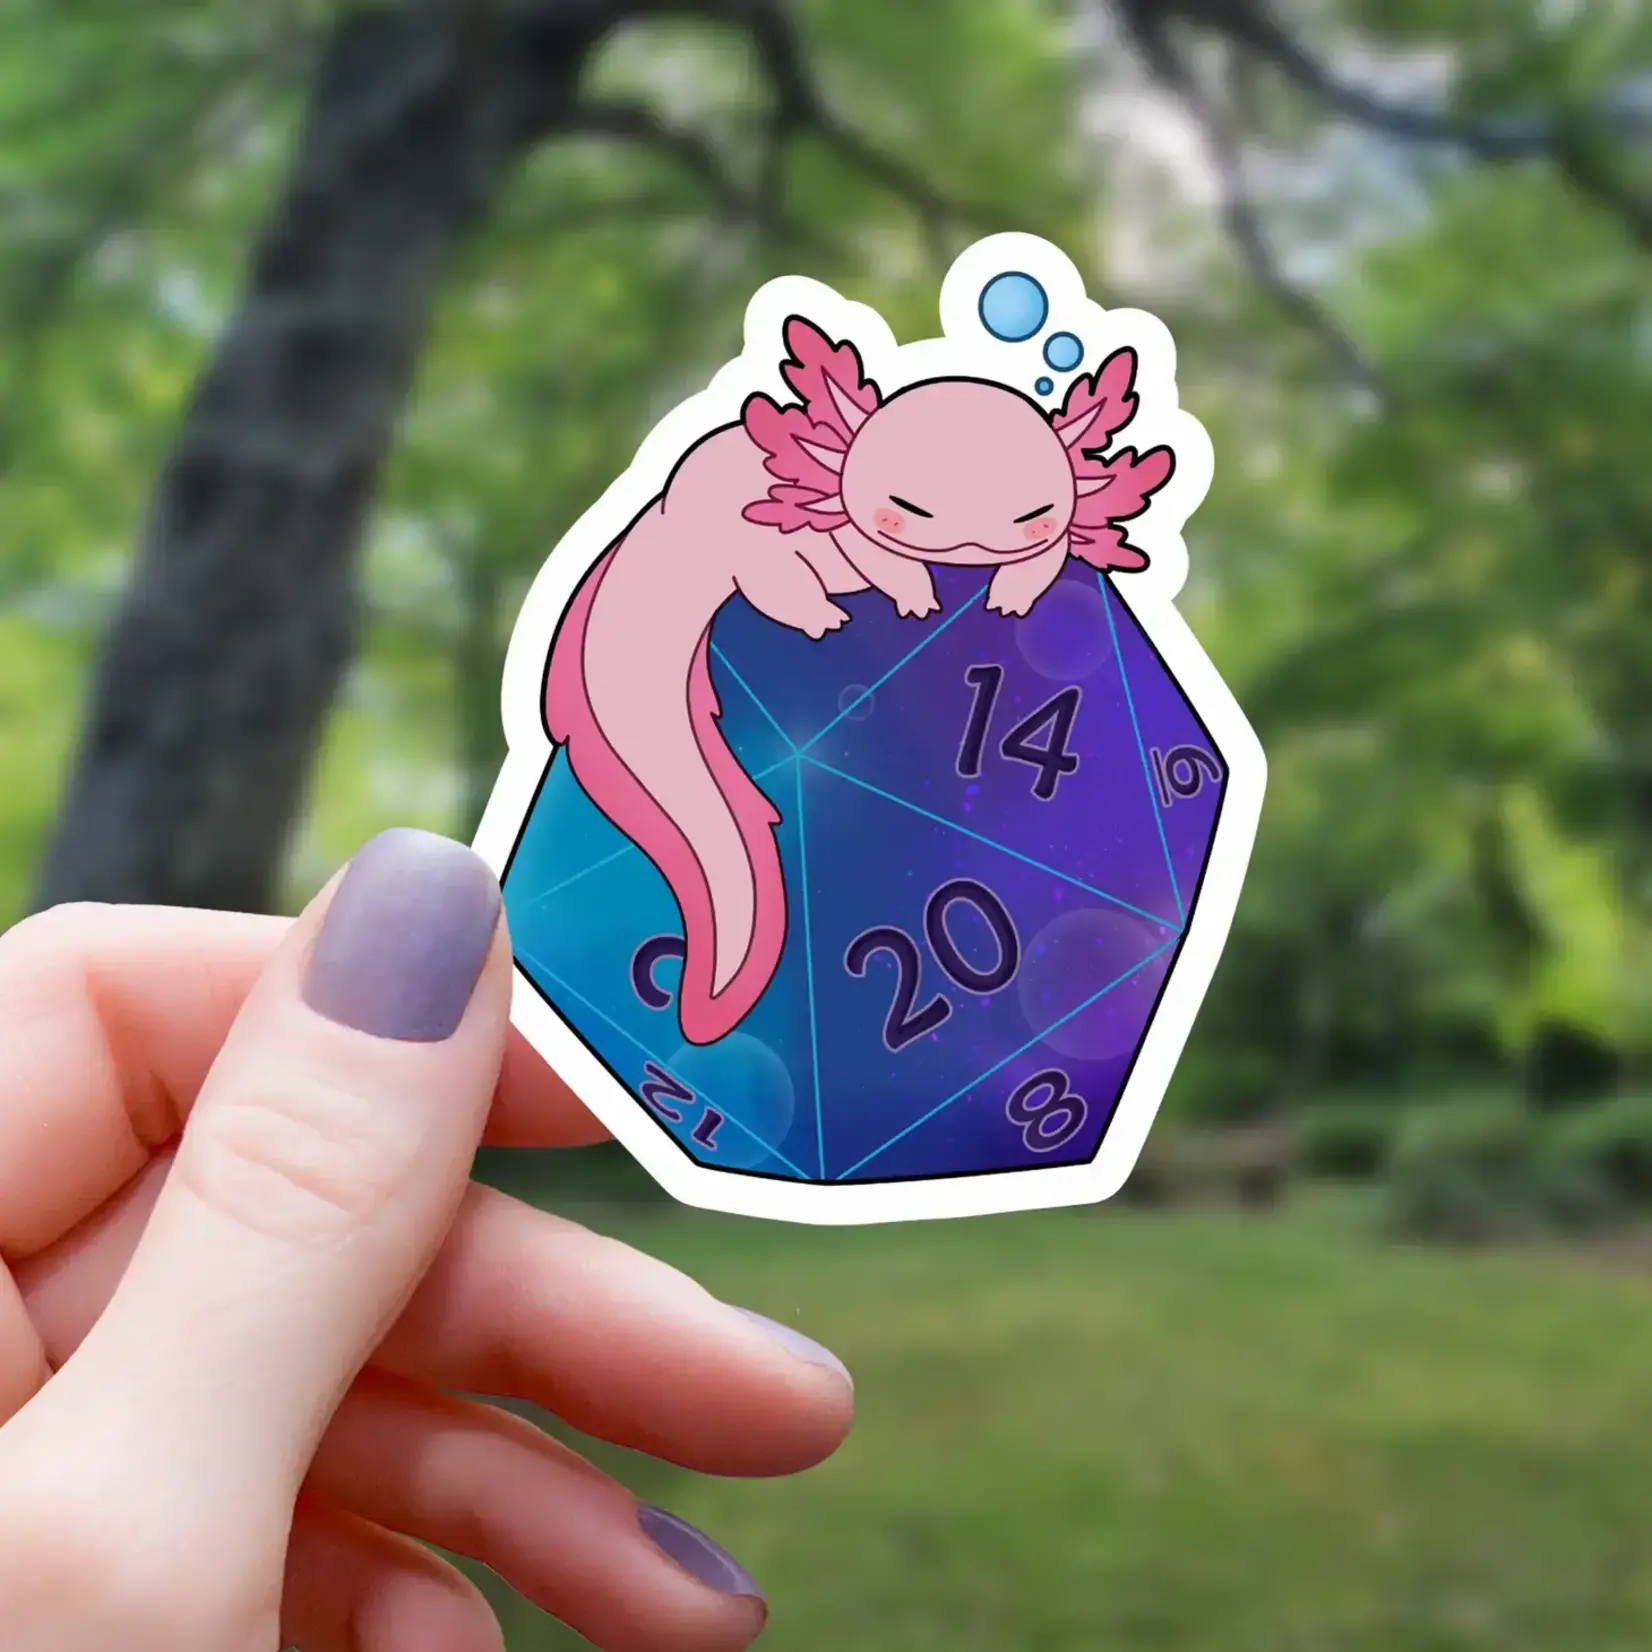 Mimic Gaming Co Sticker: Axolotl On Galaxy D20 Dice (3")